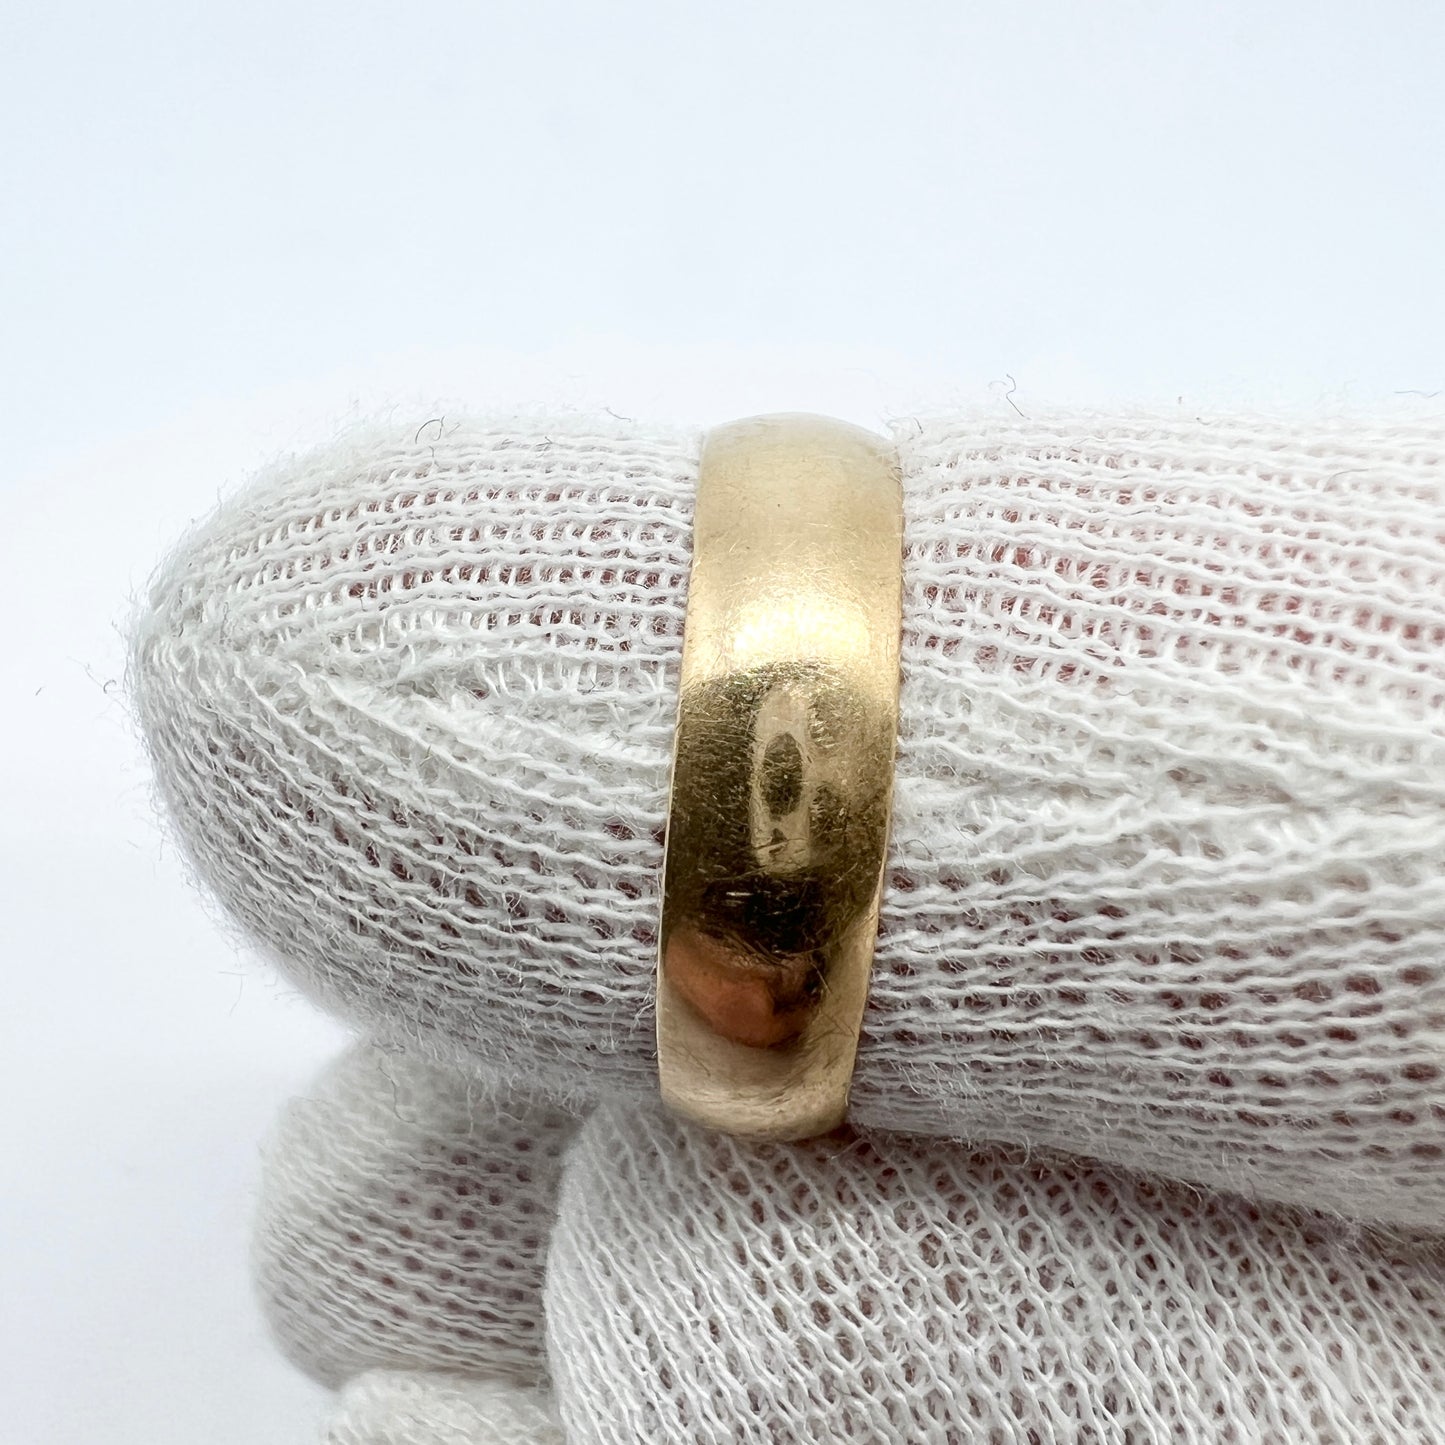 Anton Lundin, Sweden 1892. Antique 18k Gold Wedding Band Ring.